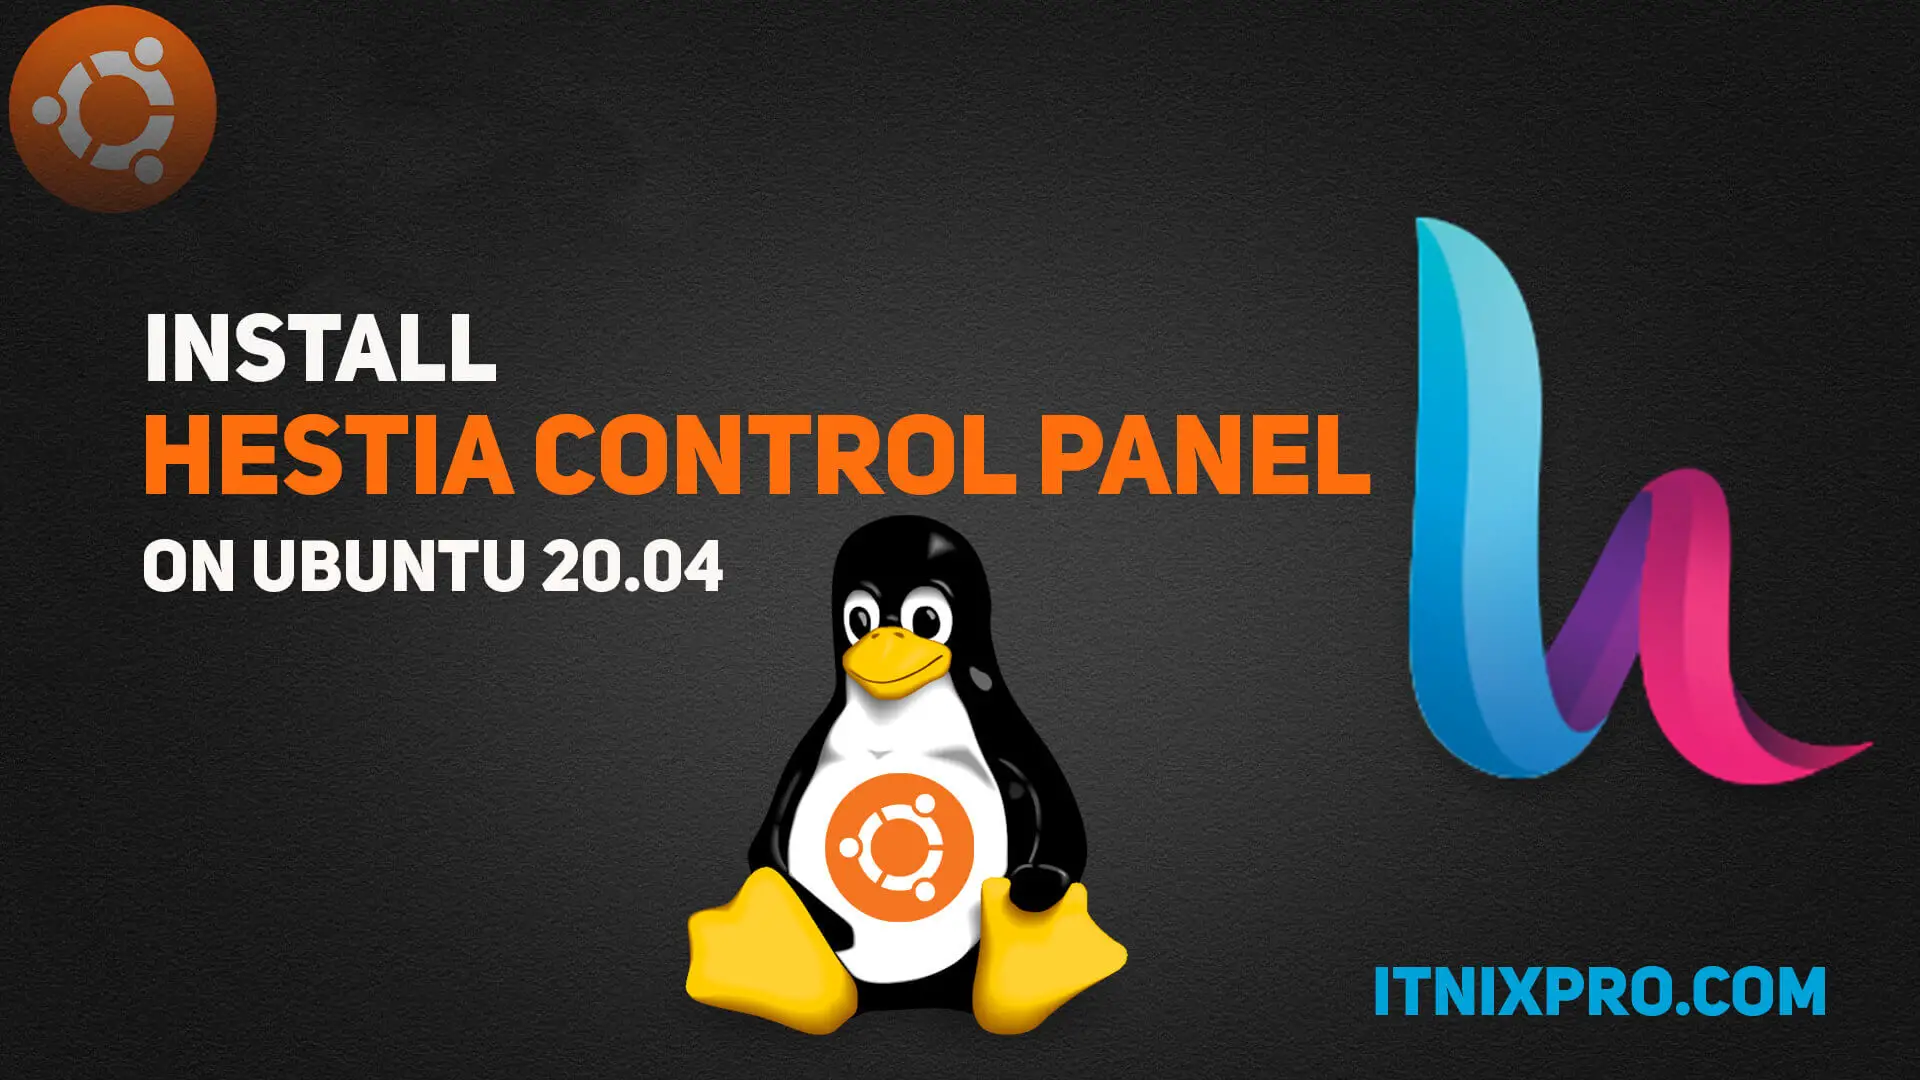 Install Hestia Control Panel on Ubuntu 20.04